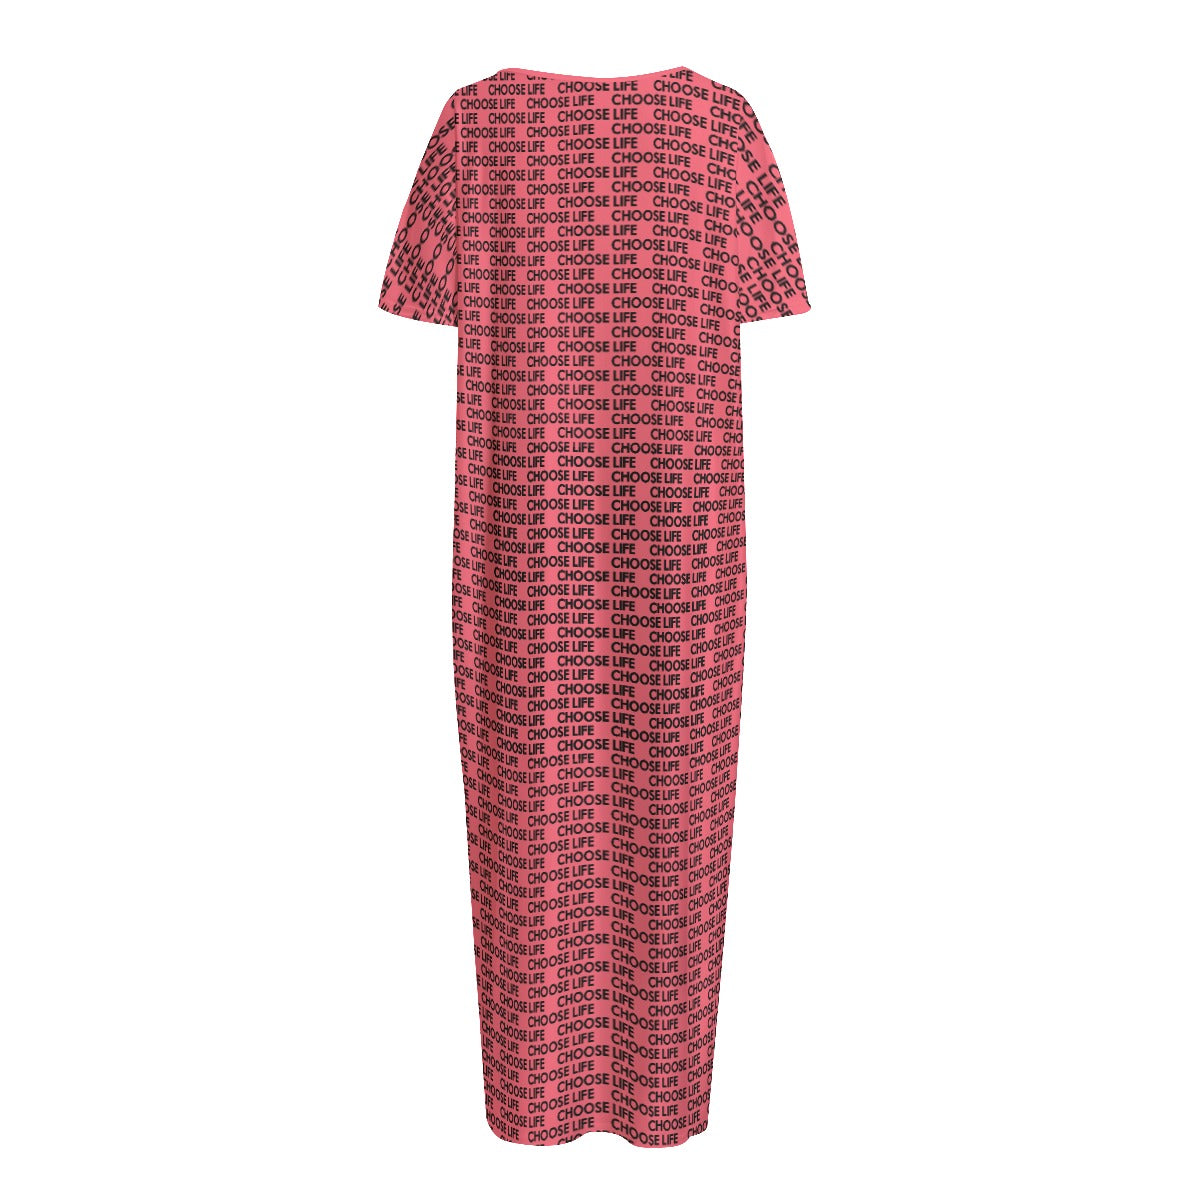 Women's Night Long Dress With Pocket - Choose Life print